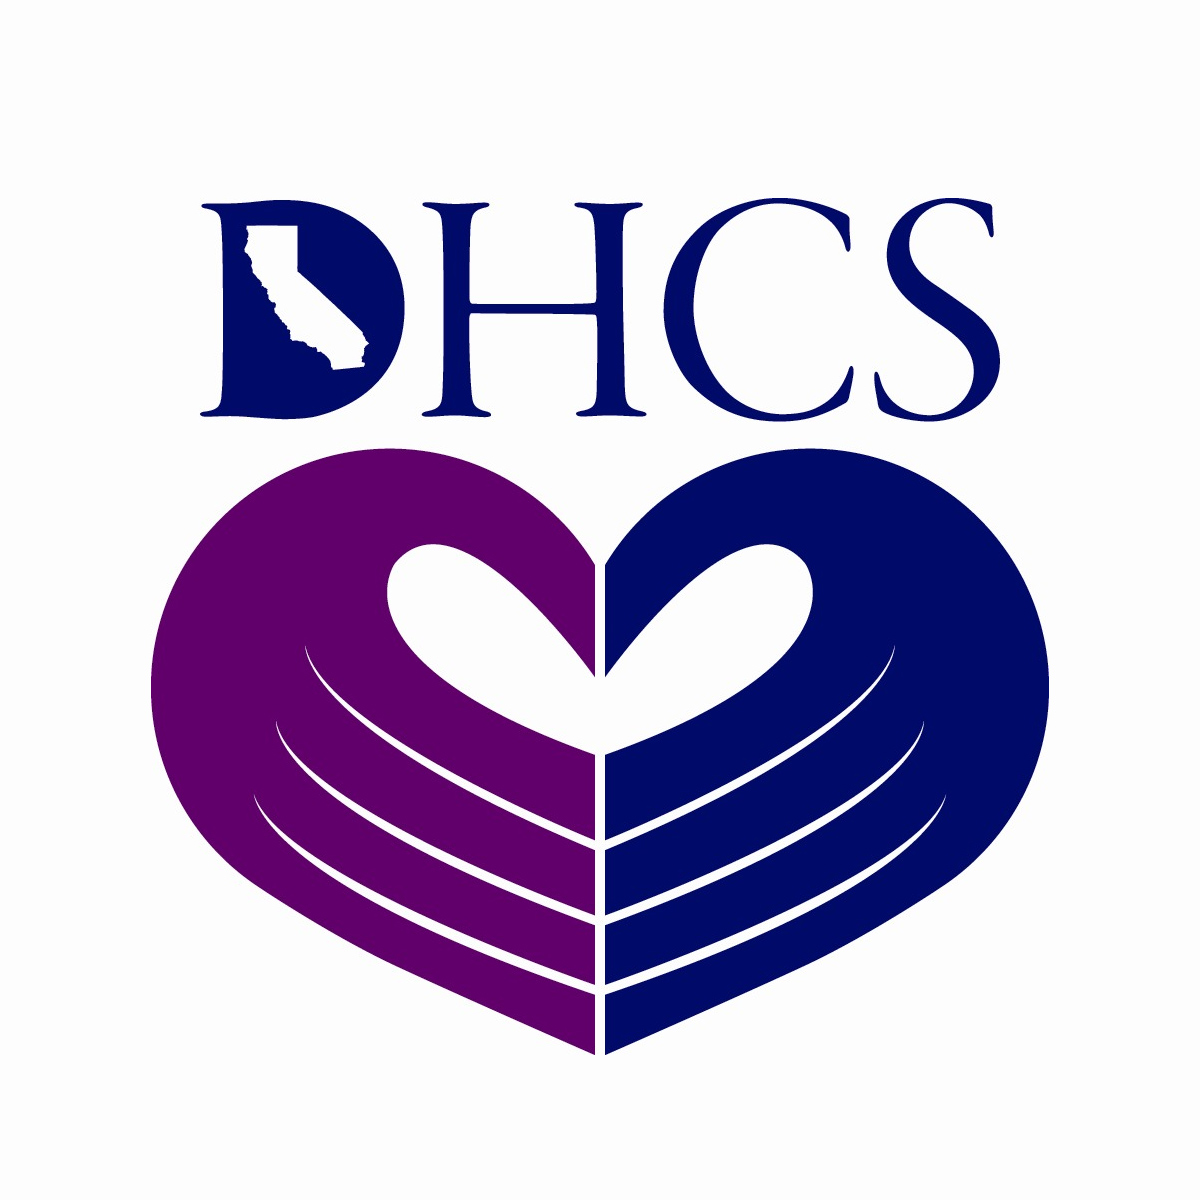 DHCS logo